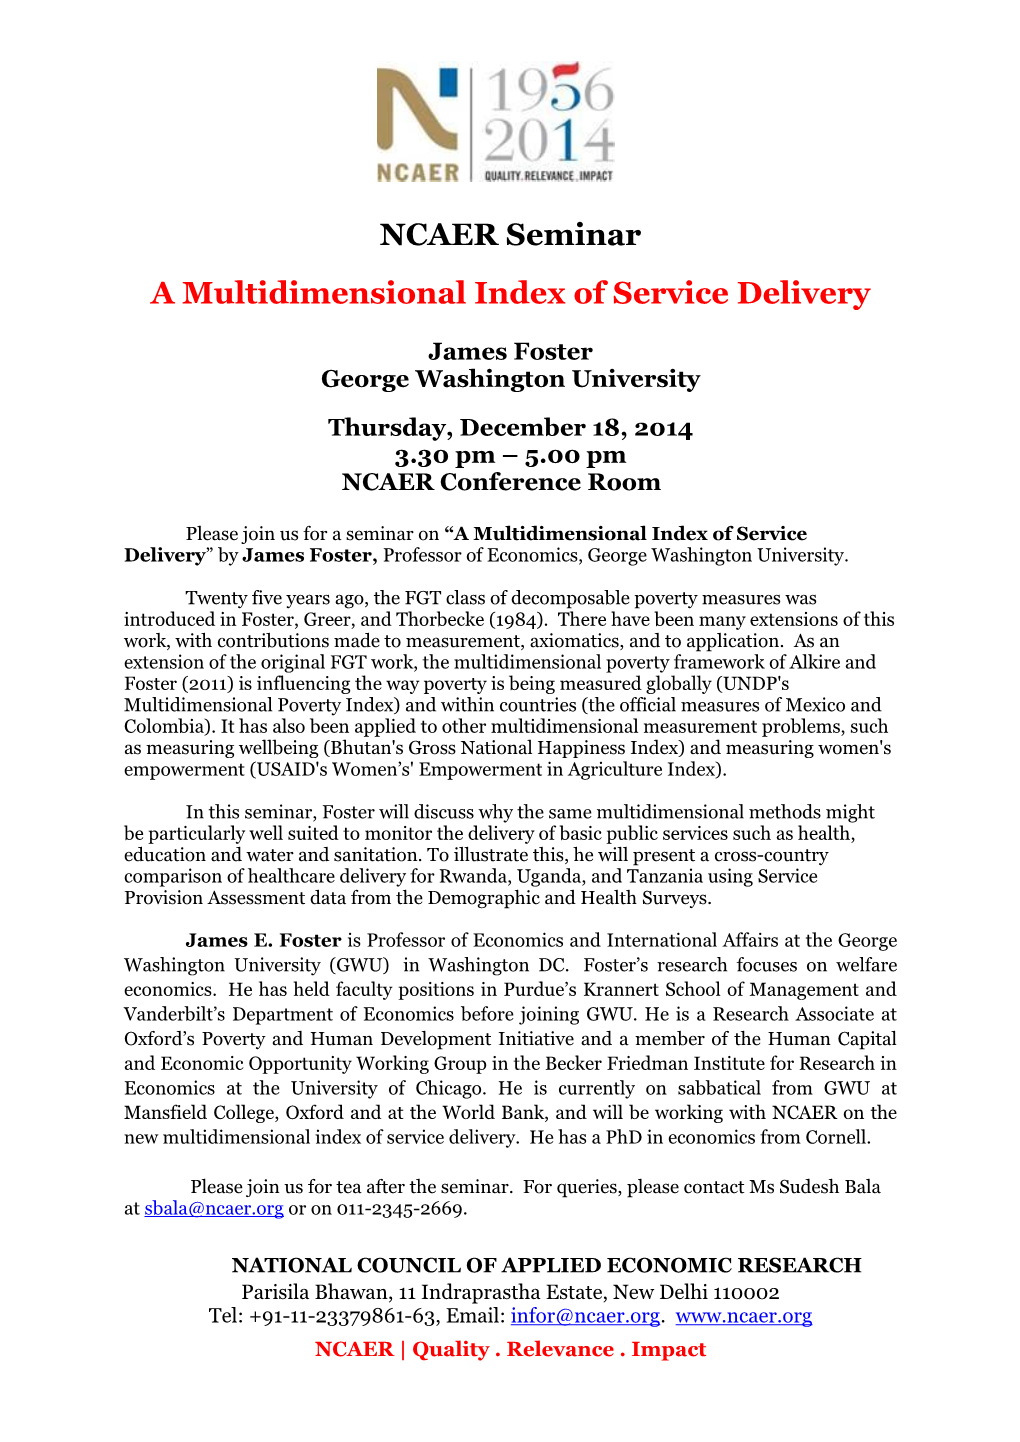 NCAER Seminar a Multidimensional Index of Service Delivery